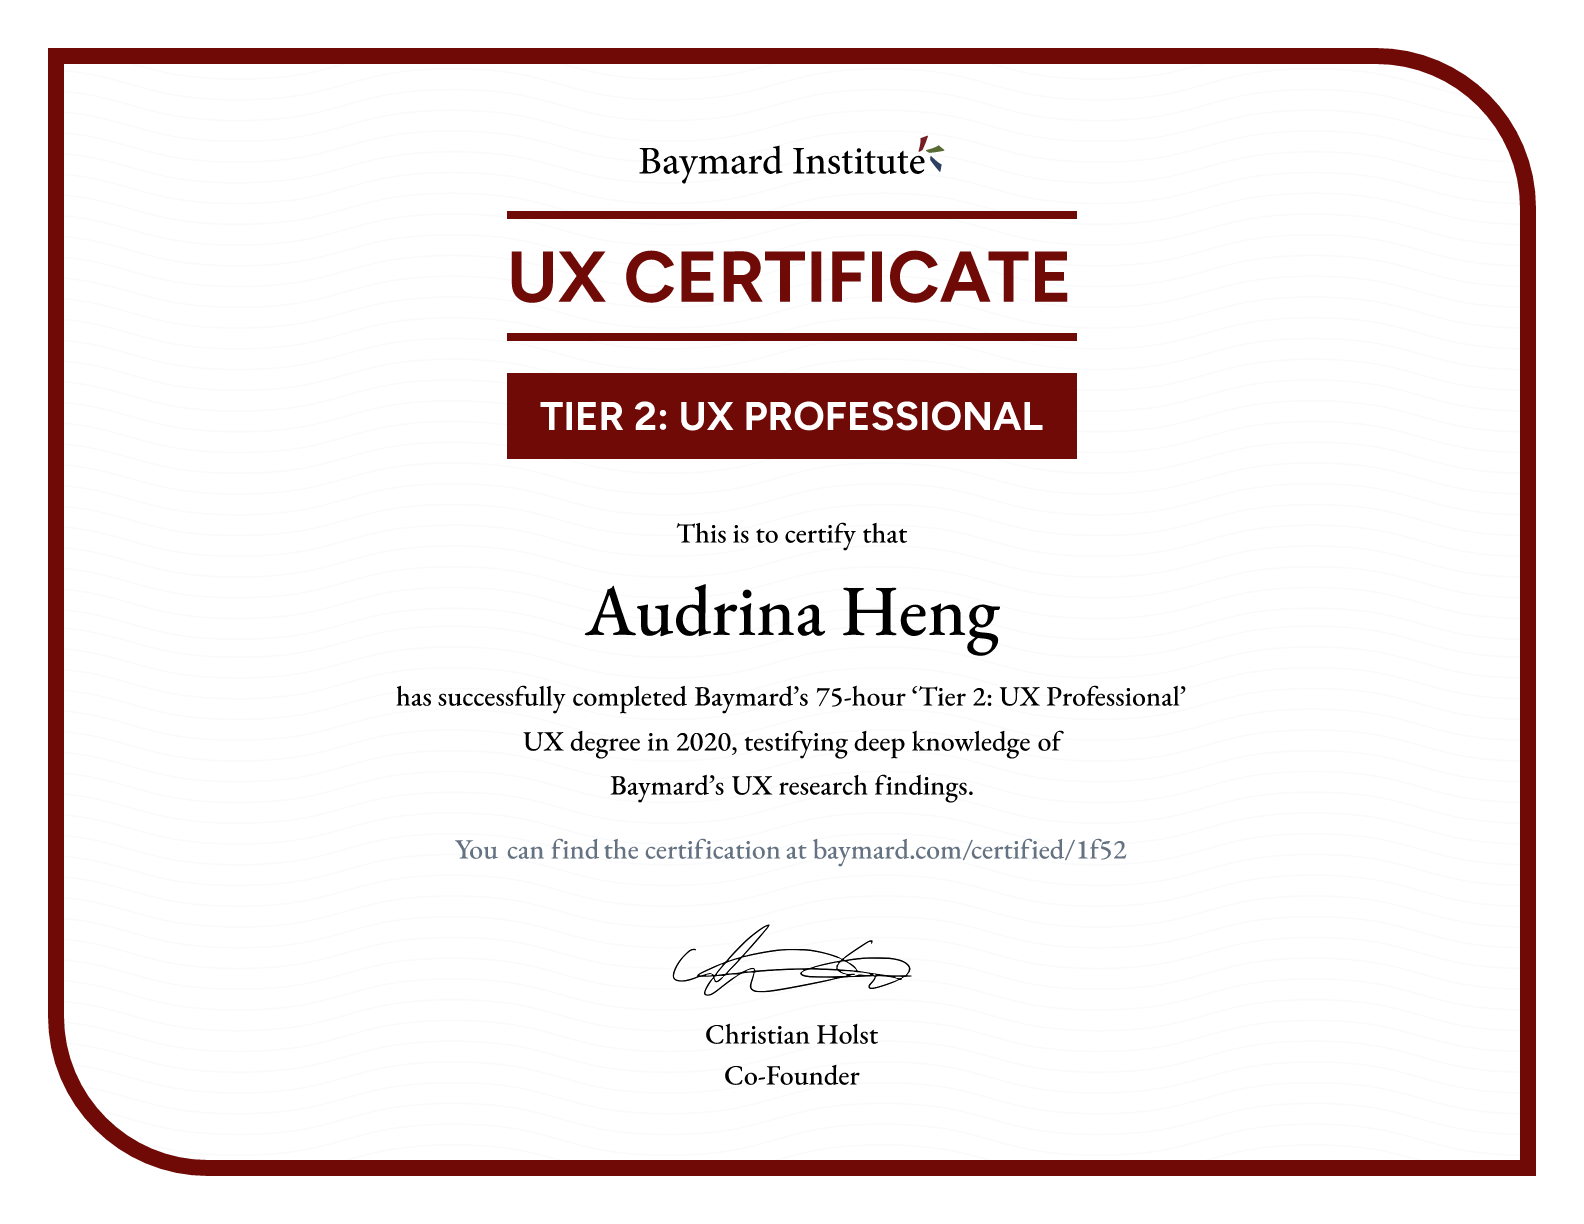 Audrina Heng’s certificate